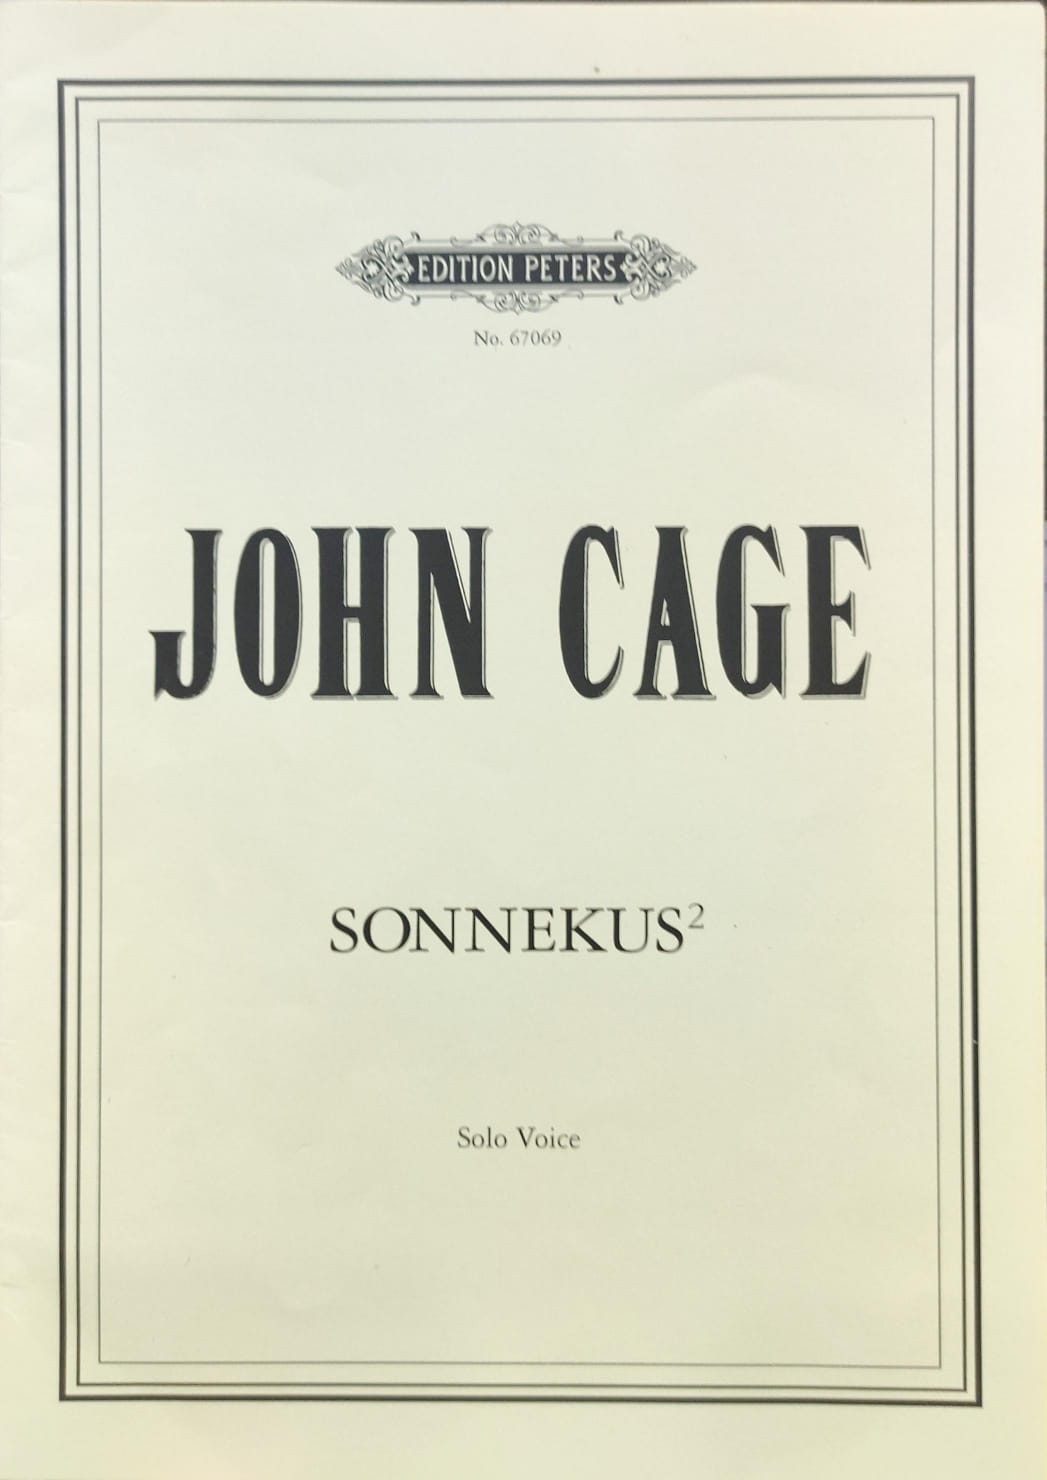 John Cage: Sonnekus 2